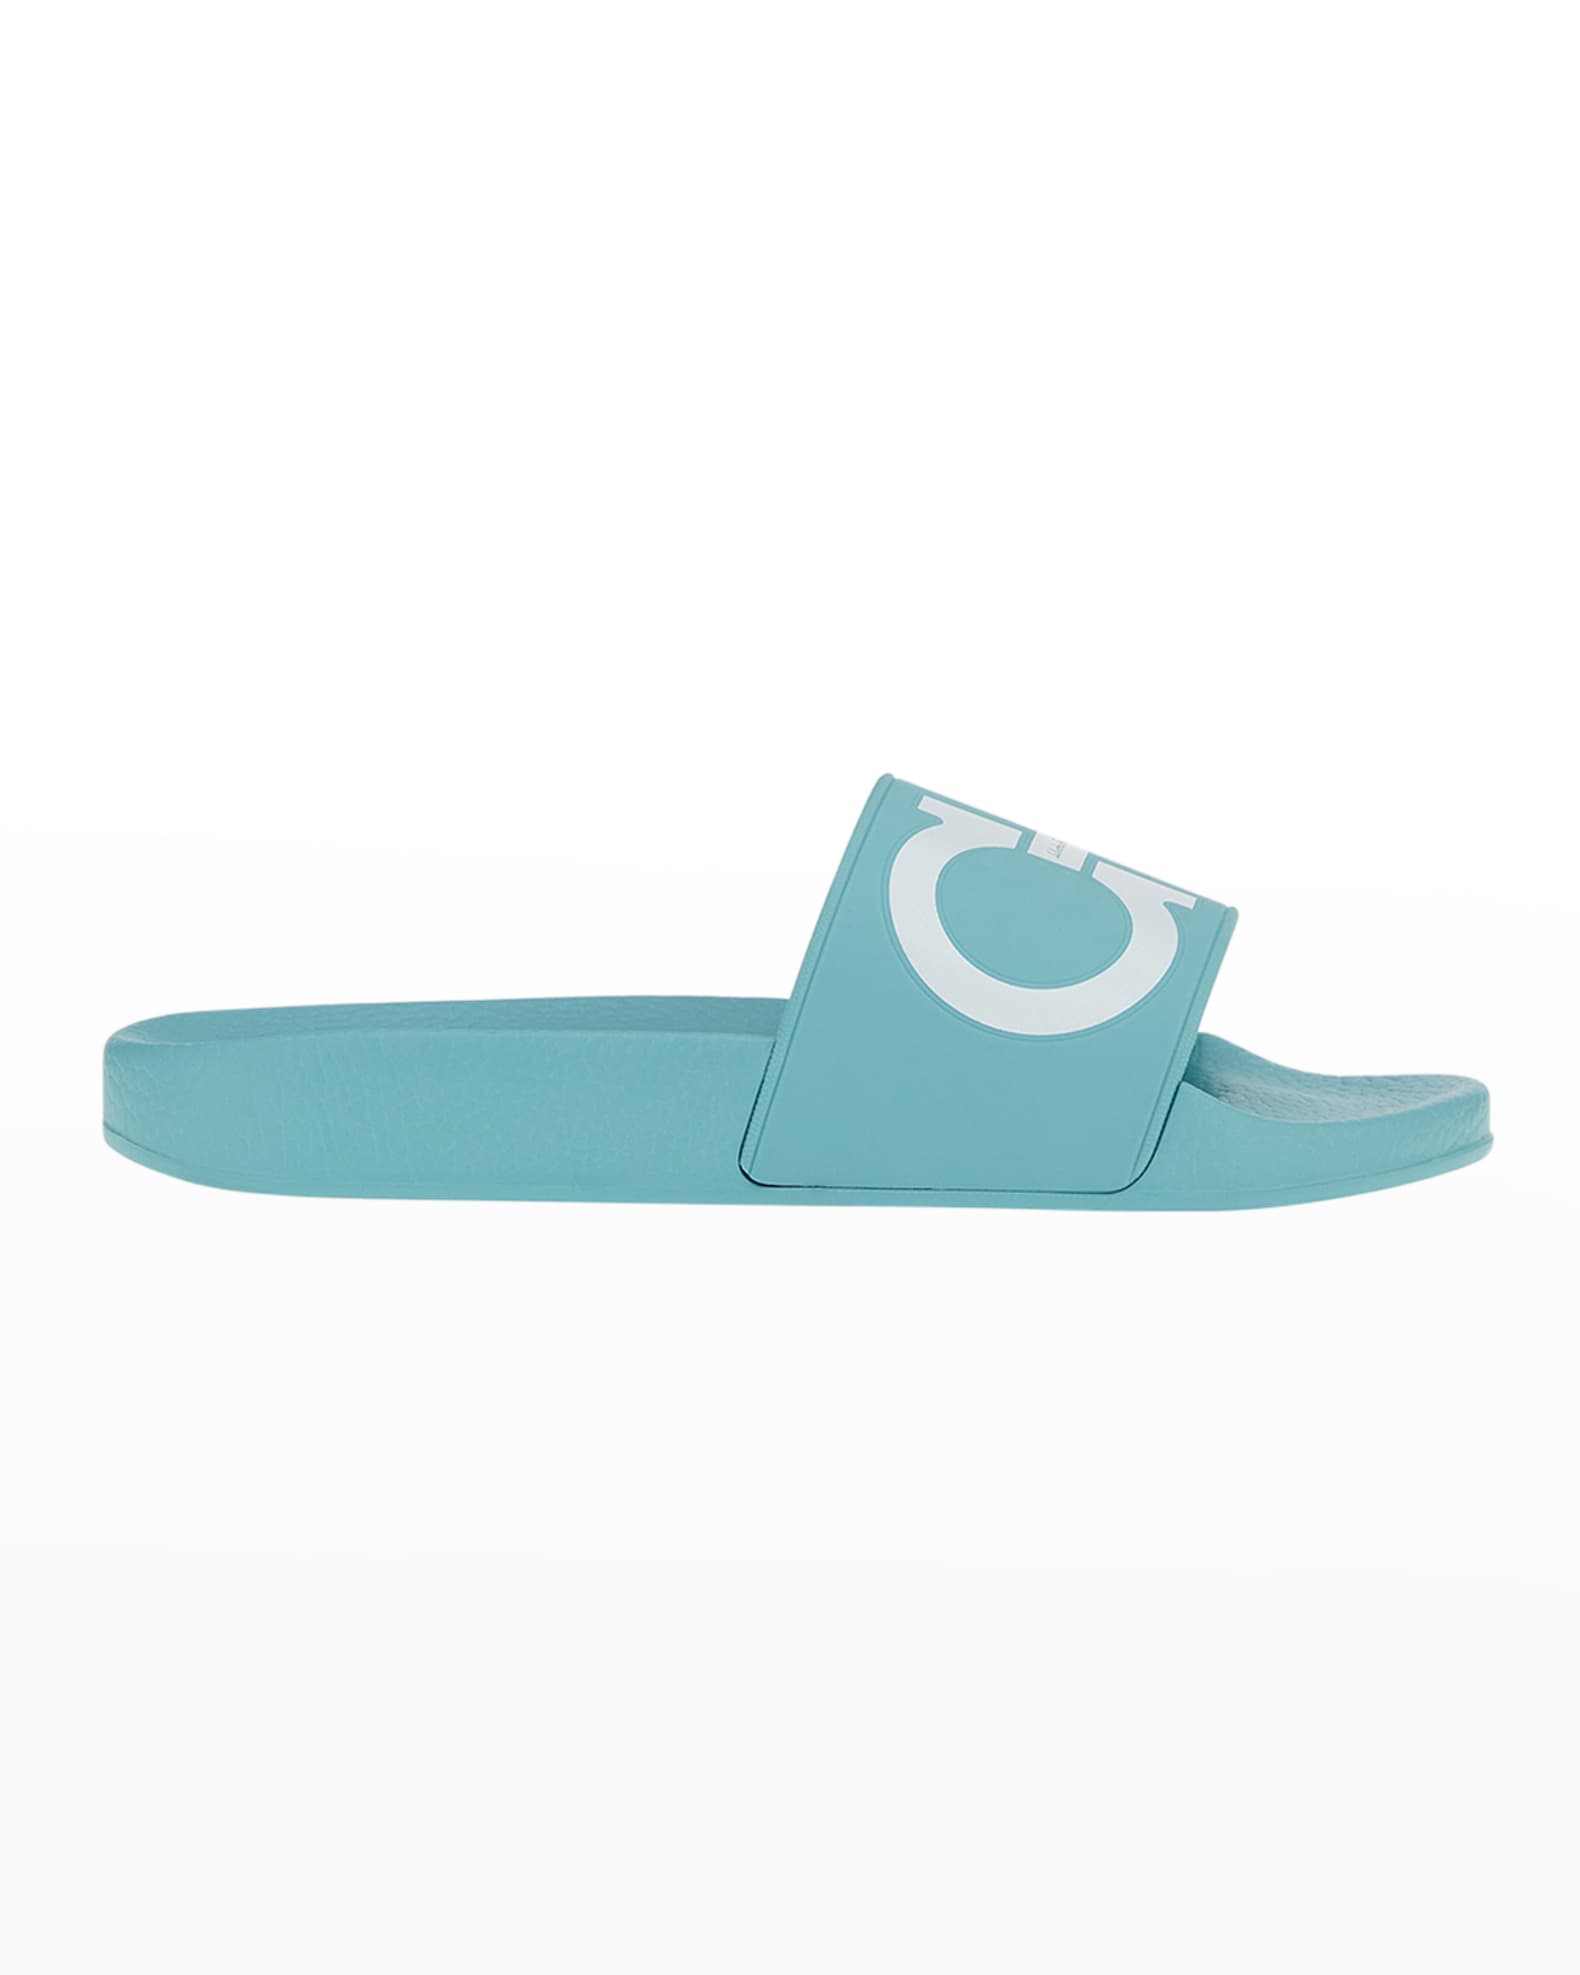 Salvatore Ferragamo Groovy Gancini Pool Slide Sandals | Neiman Marcus